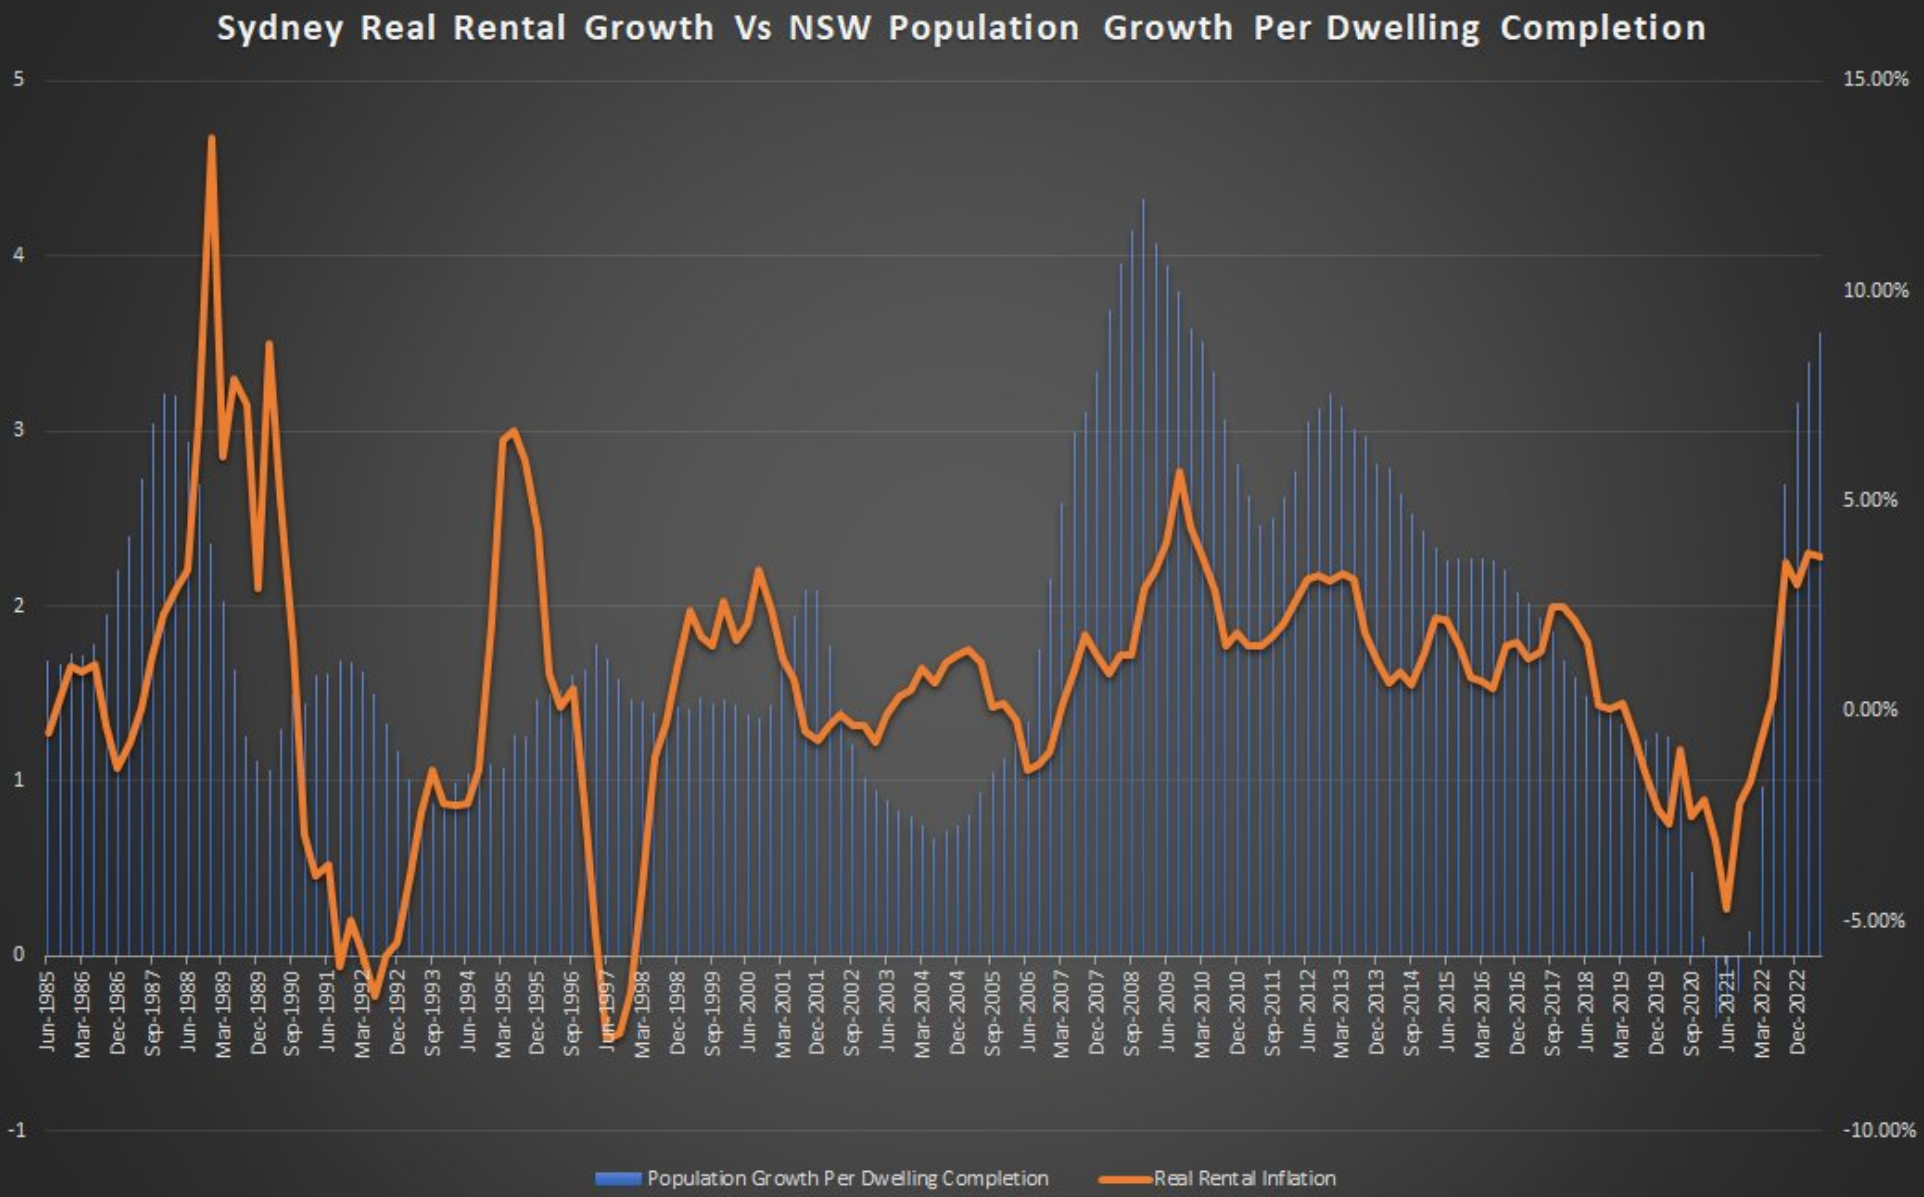 Sydney real rents versus population growth